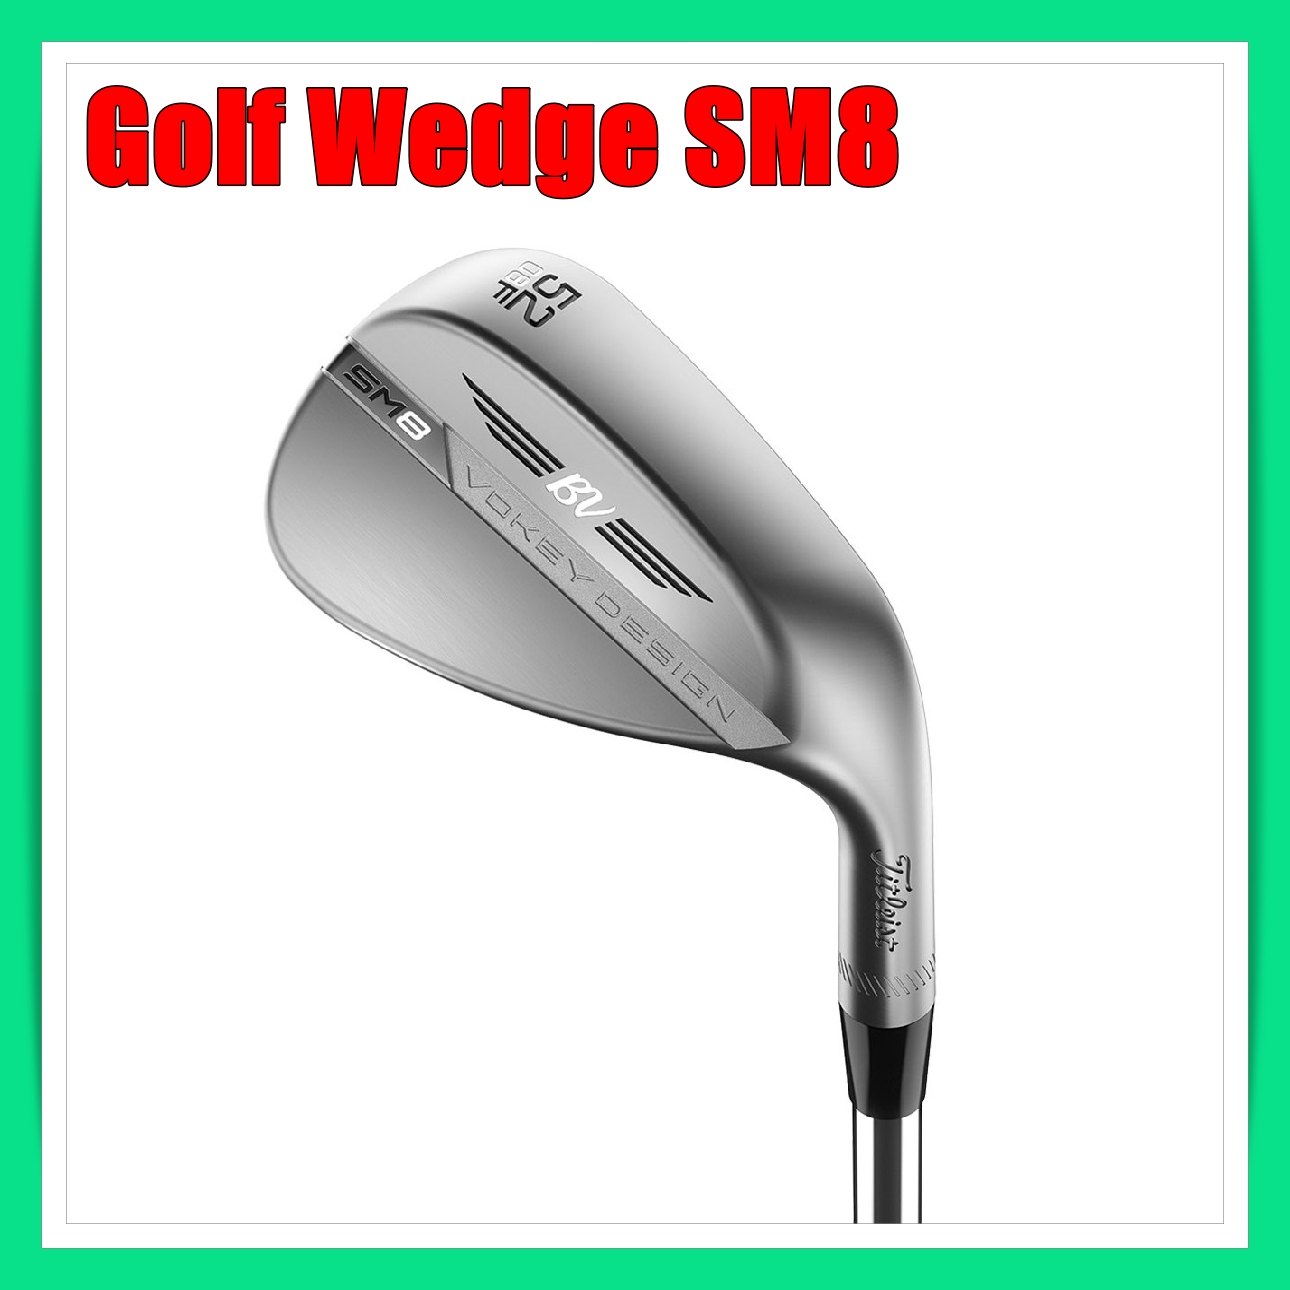 [NEW ลดพิเศษ ] ไม้กอล์ฟ Titleist Golf Wedge SM8 ของใหม่ล่าสุด High spin ตกหยุด